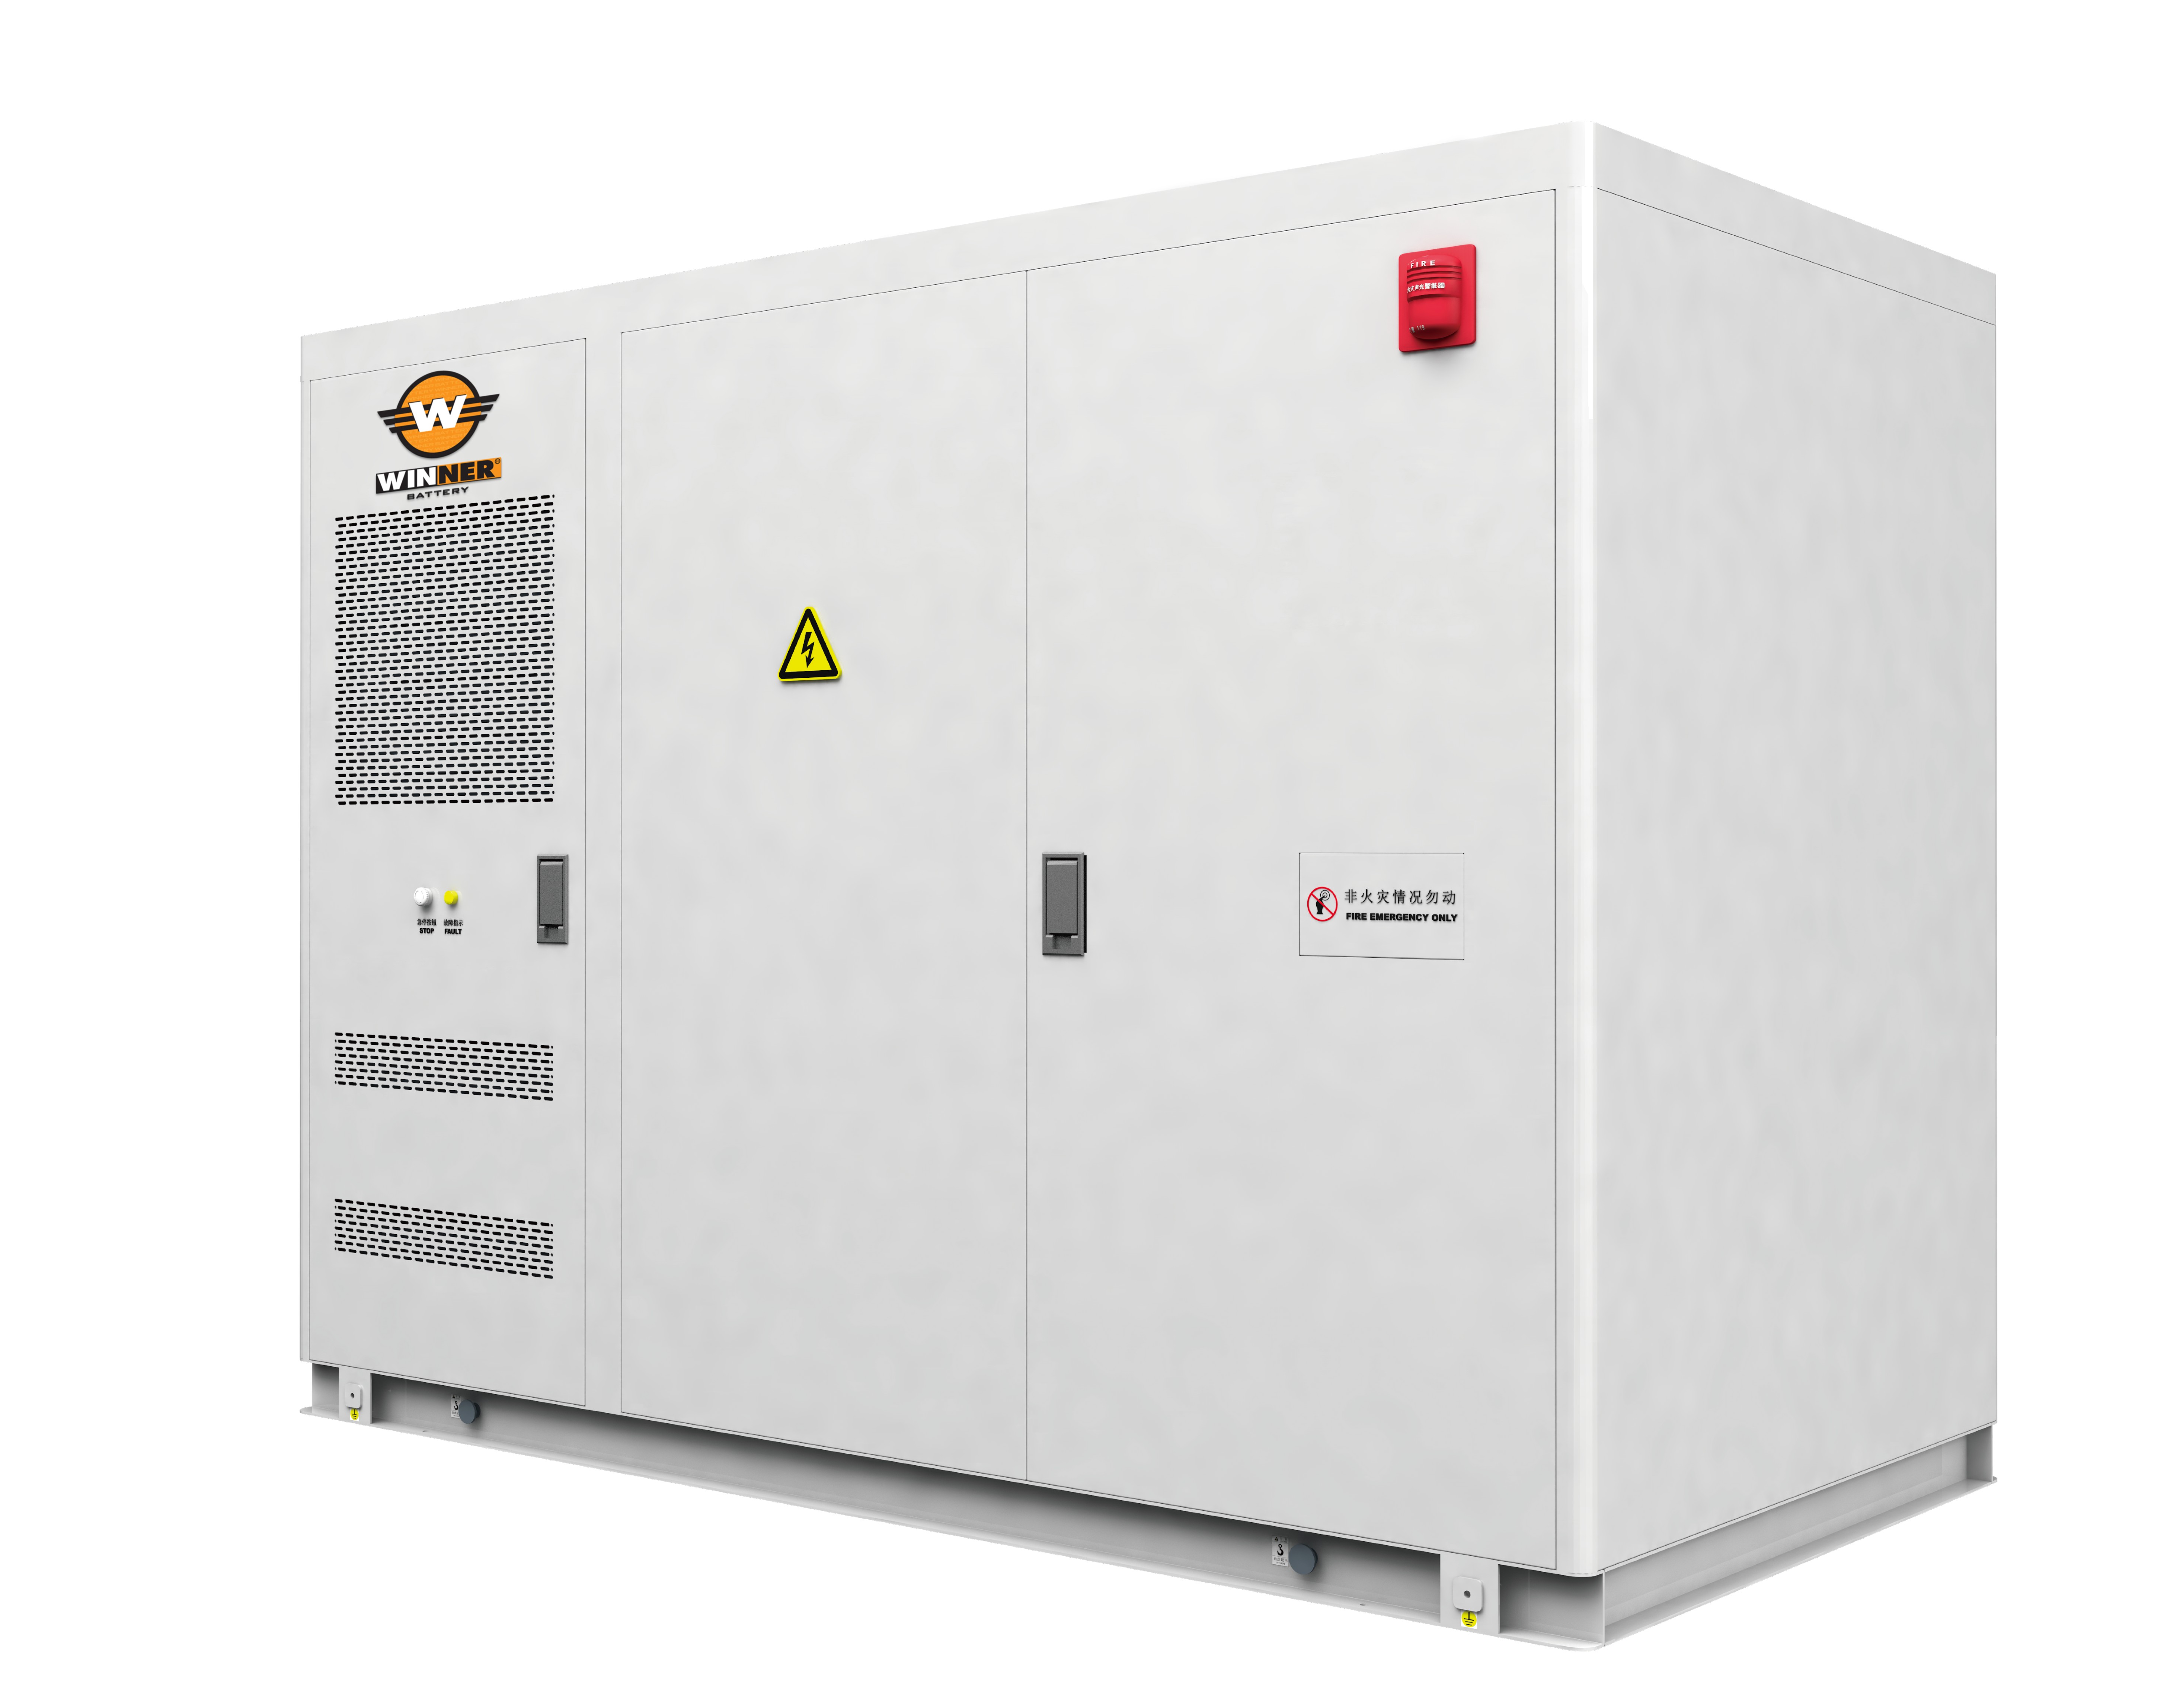 WINNER DRAKON HV Liquid Cooled Lithium Technology Commercial Energy Storage System